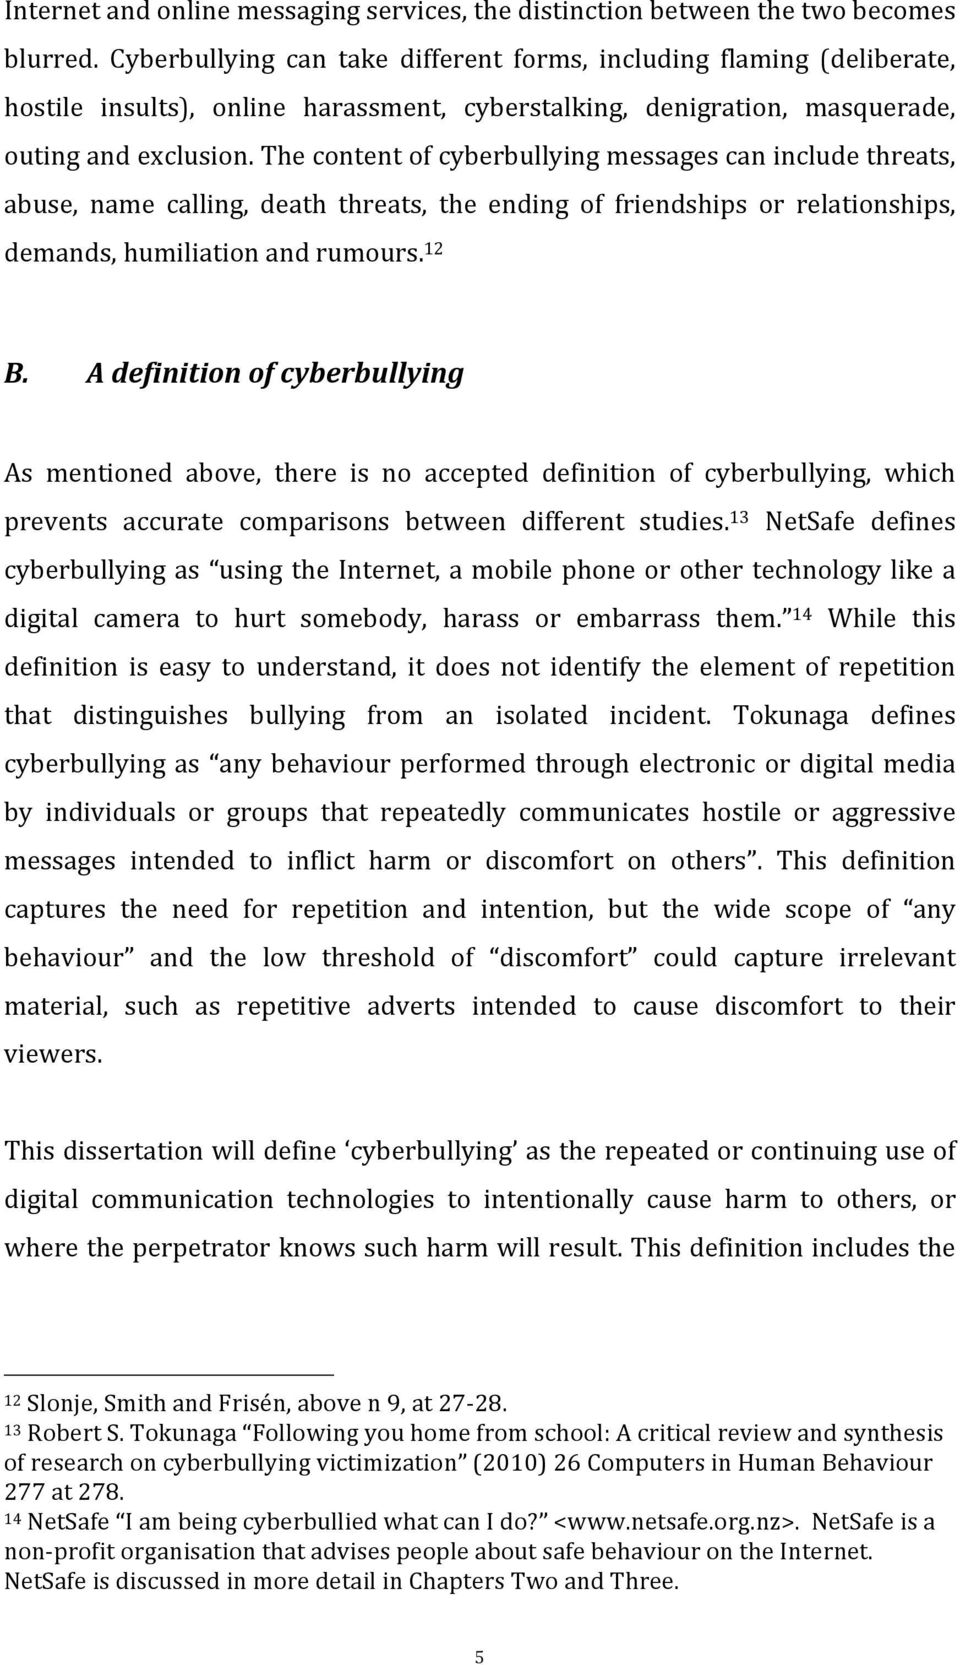 cyberbullying is illegal - pdf